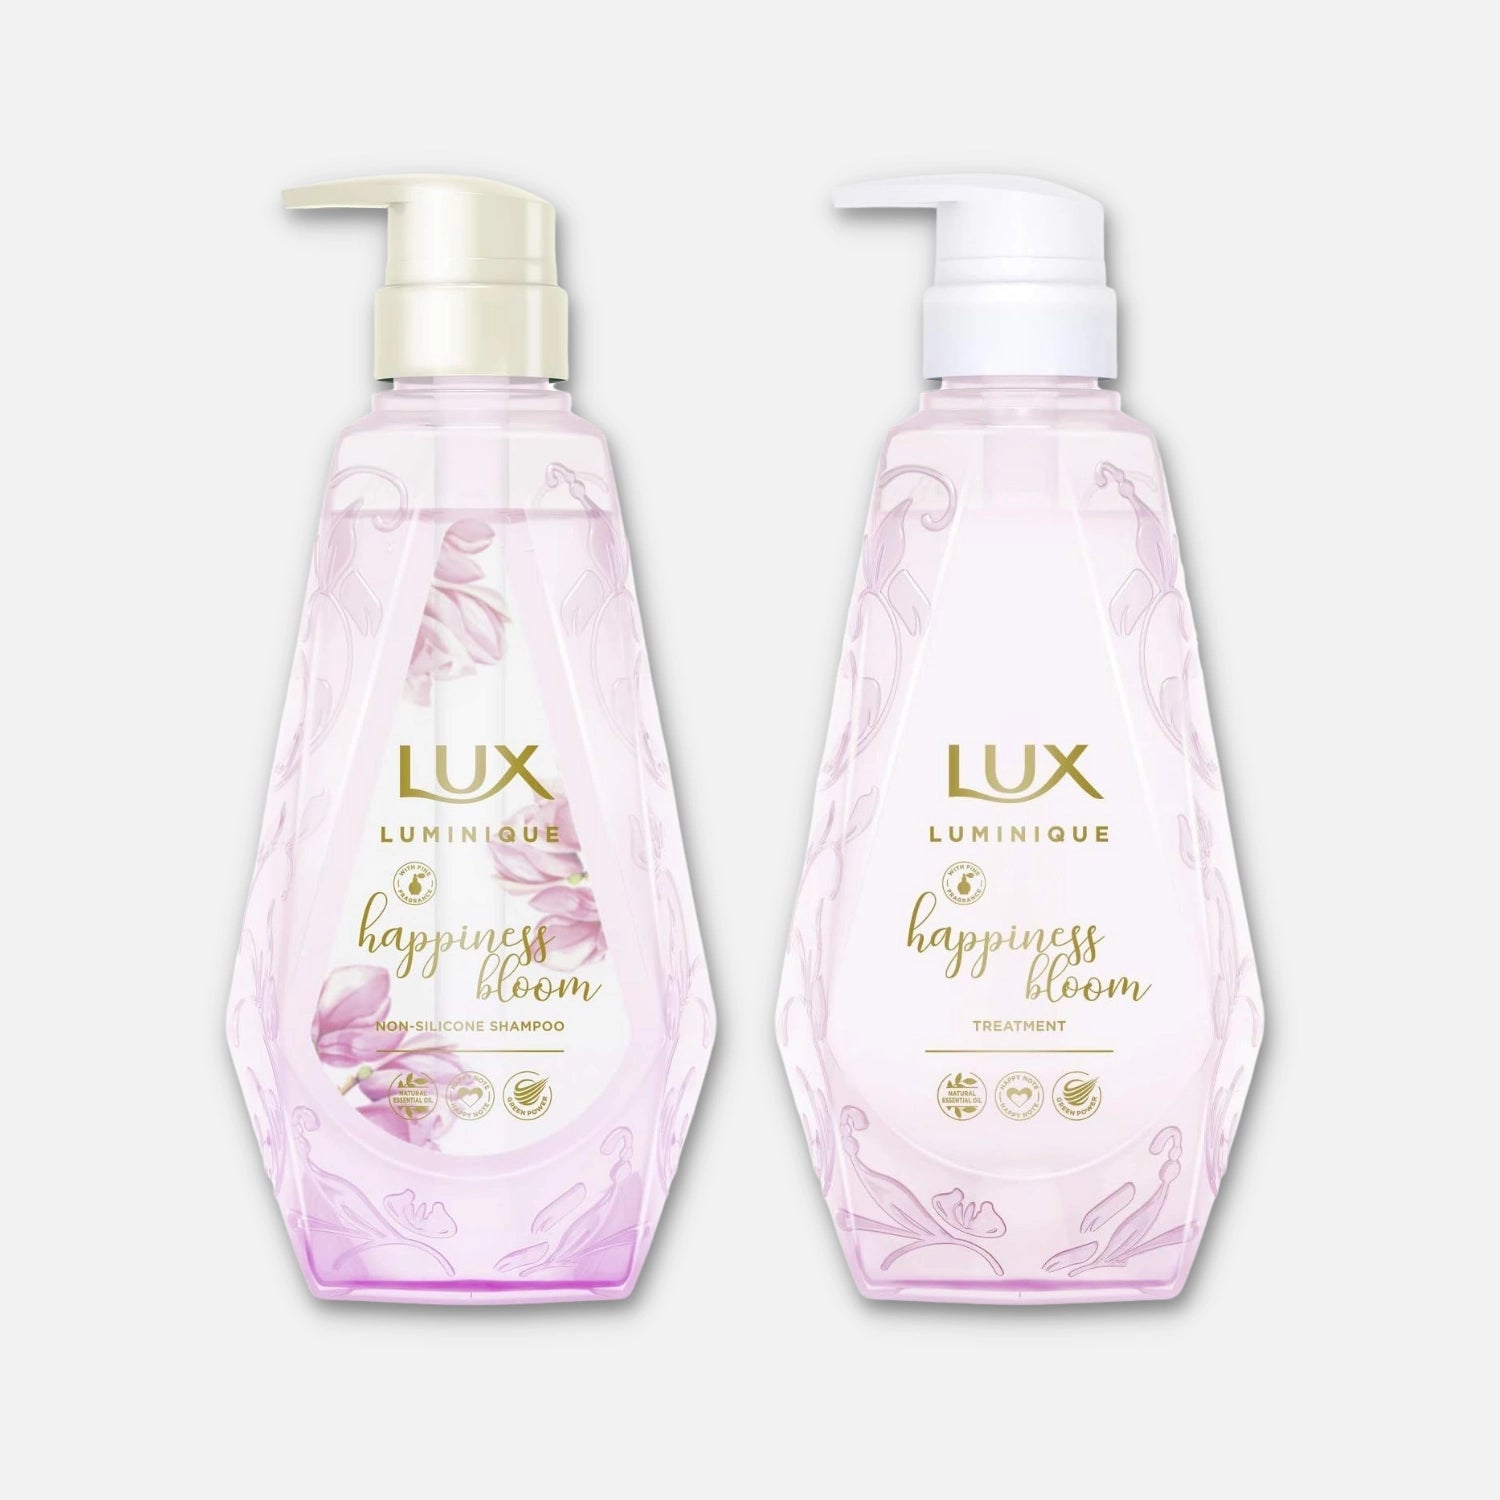 Lux Japan Lumique Happiness Bloom Shampoo & Treatment 450ml Each - Buy Me Japan